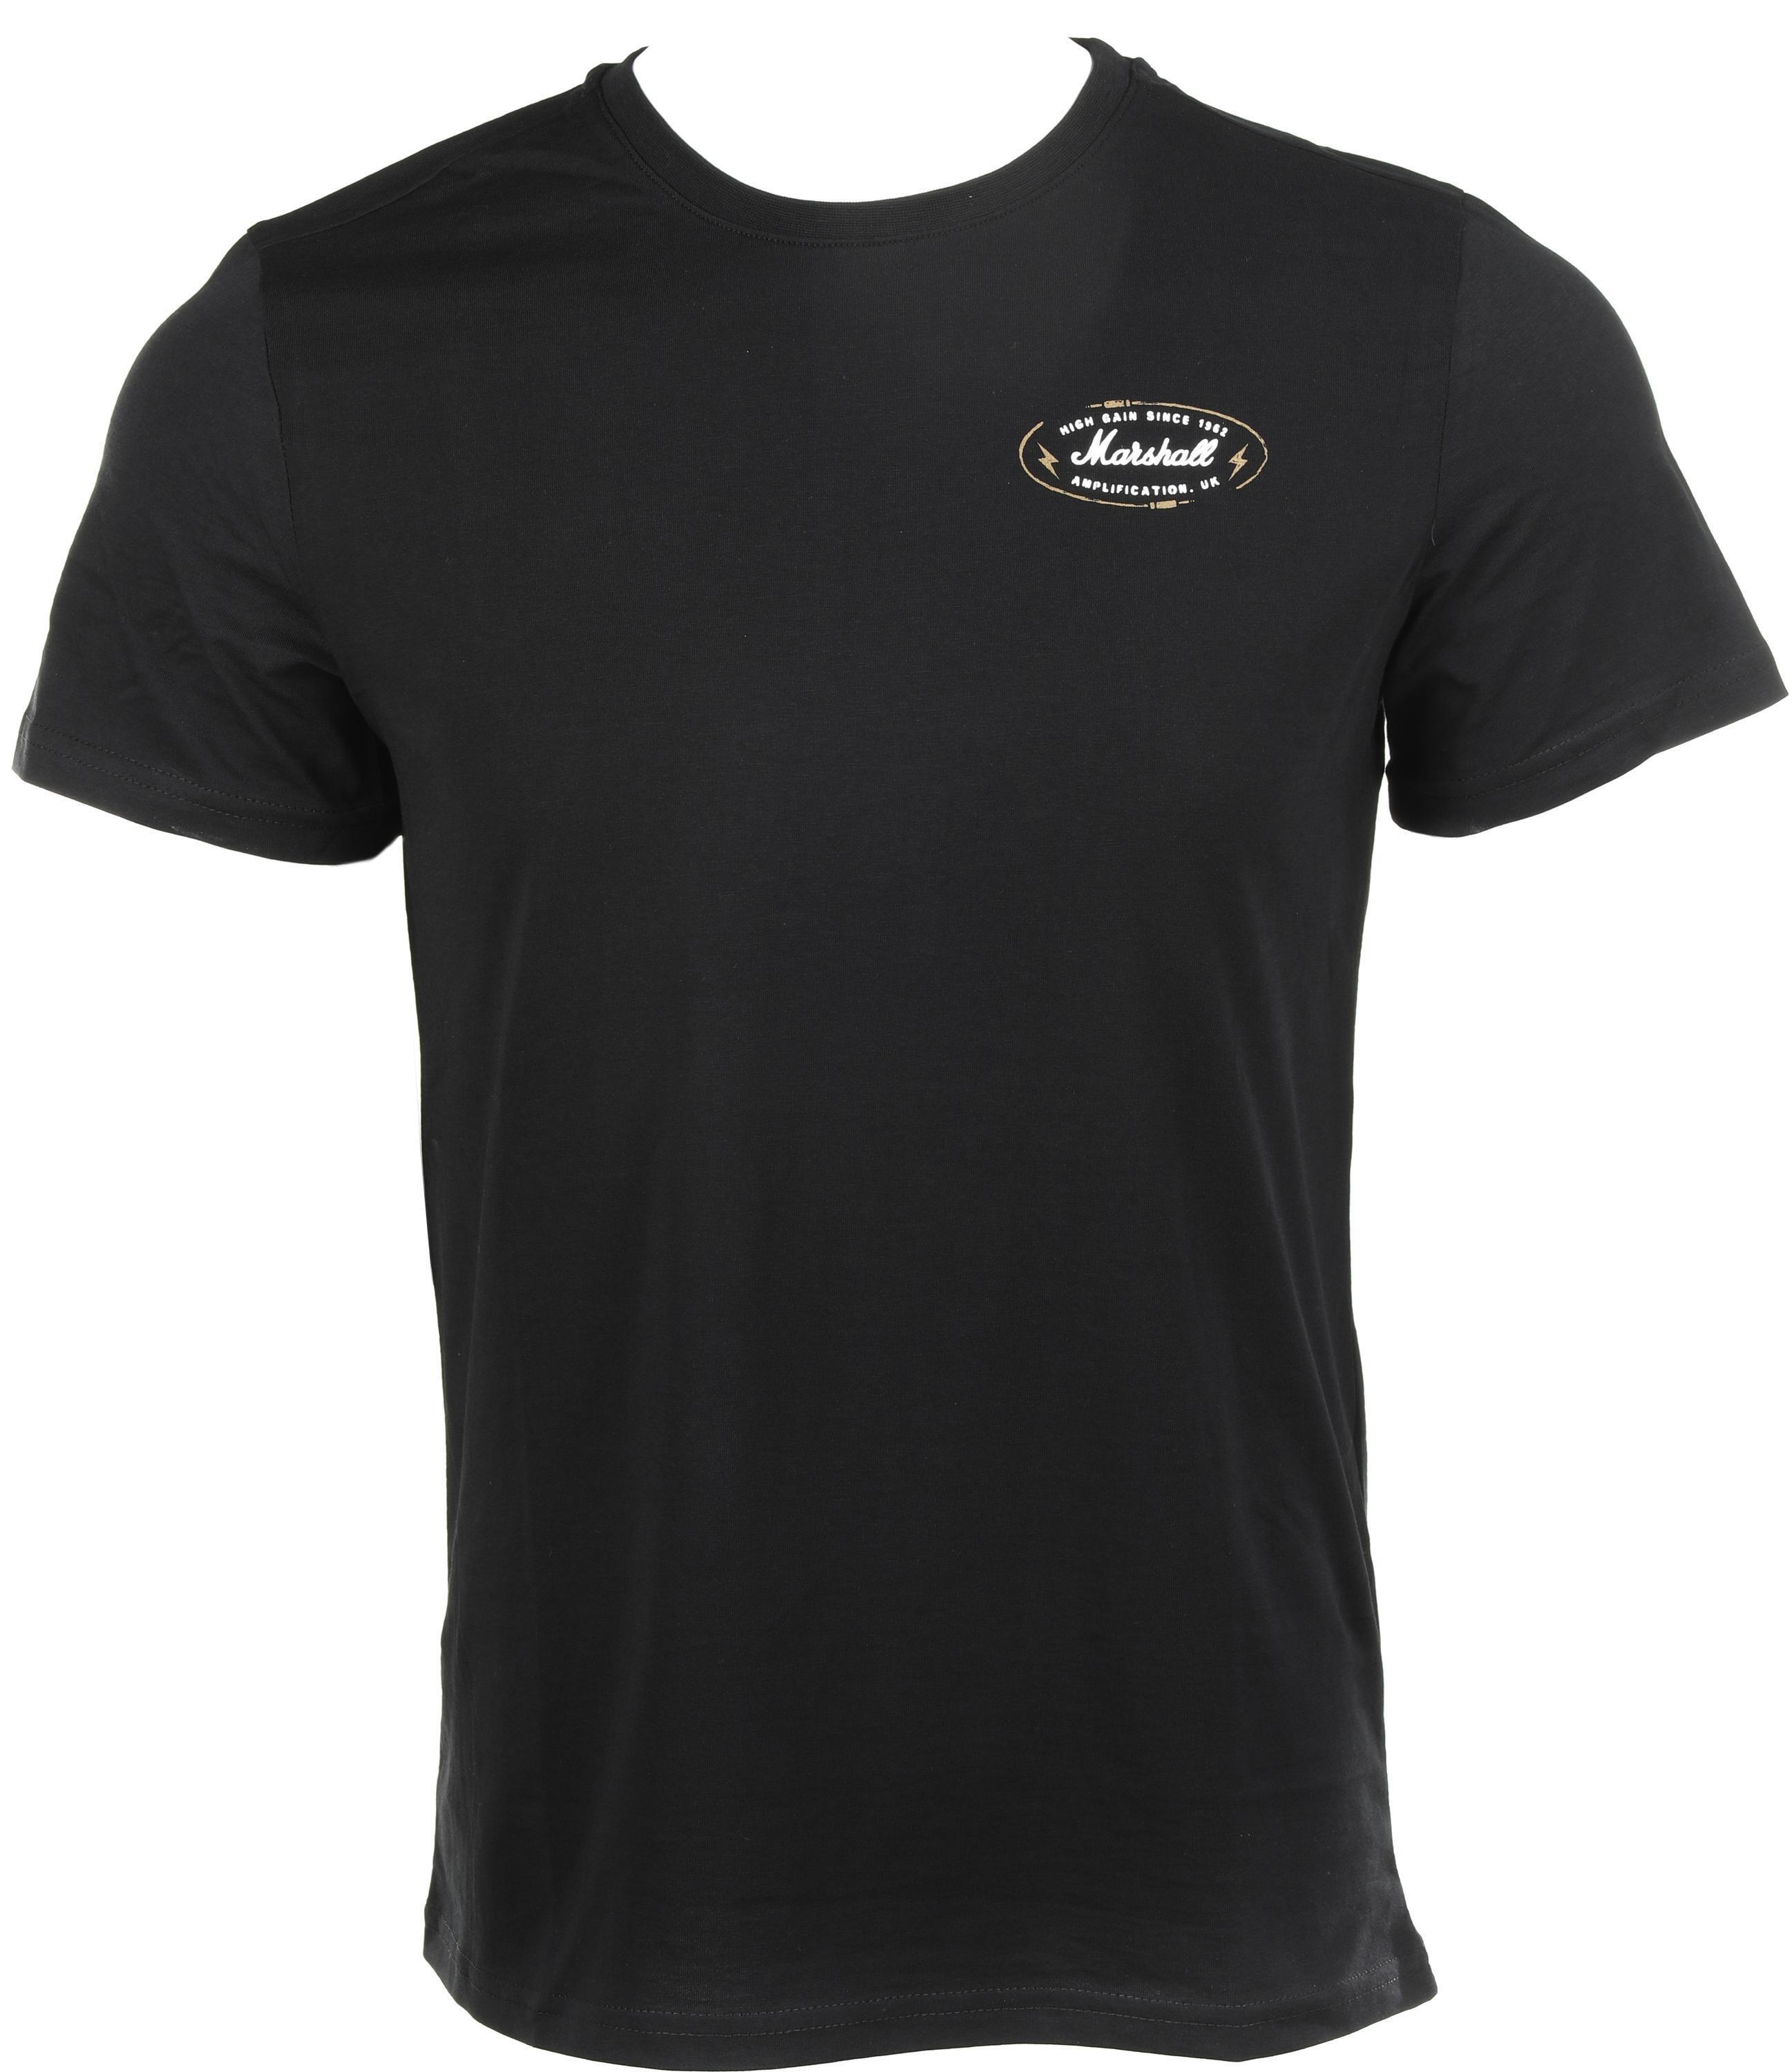 Fishman Brand T-Shirt, black, XL - shop-fishman